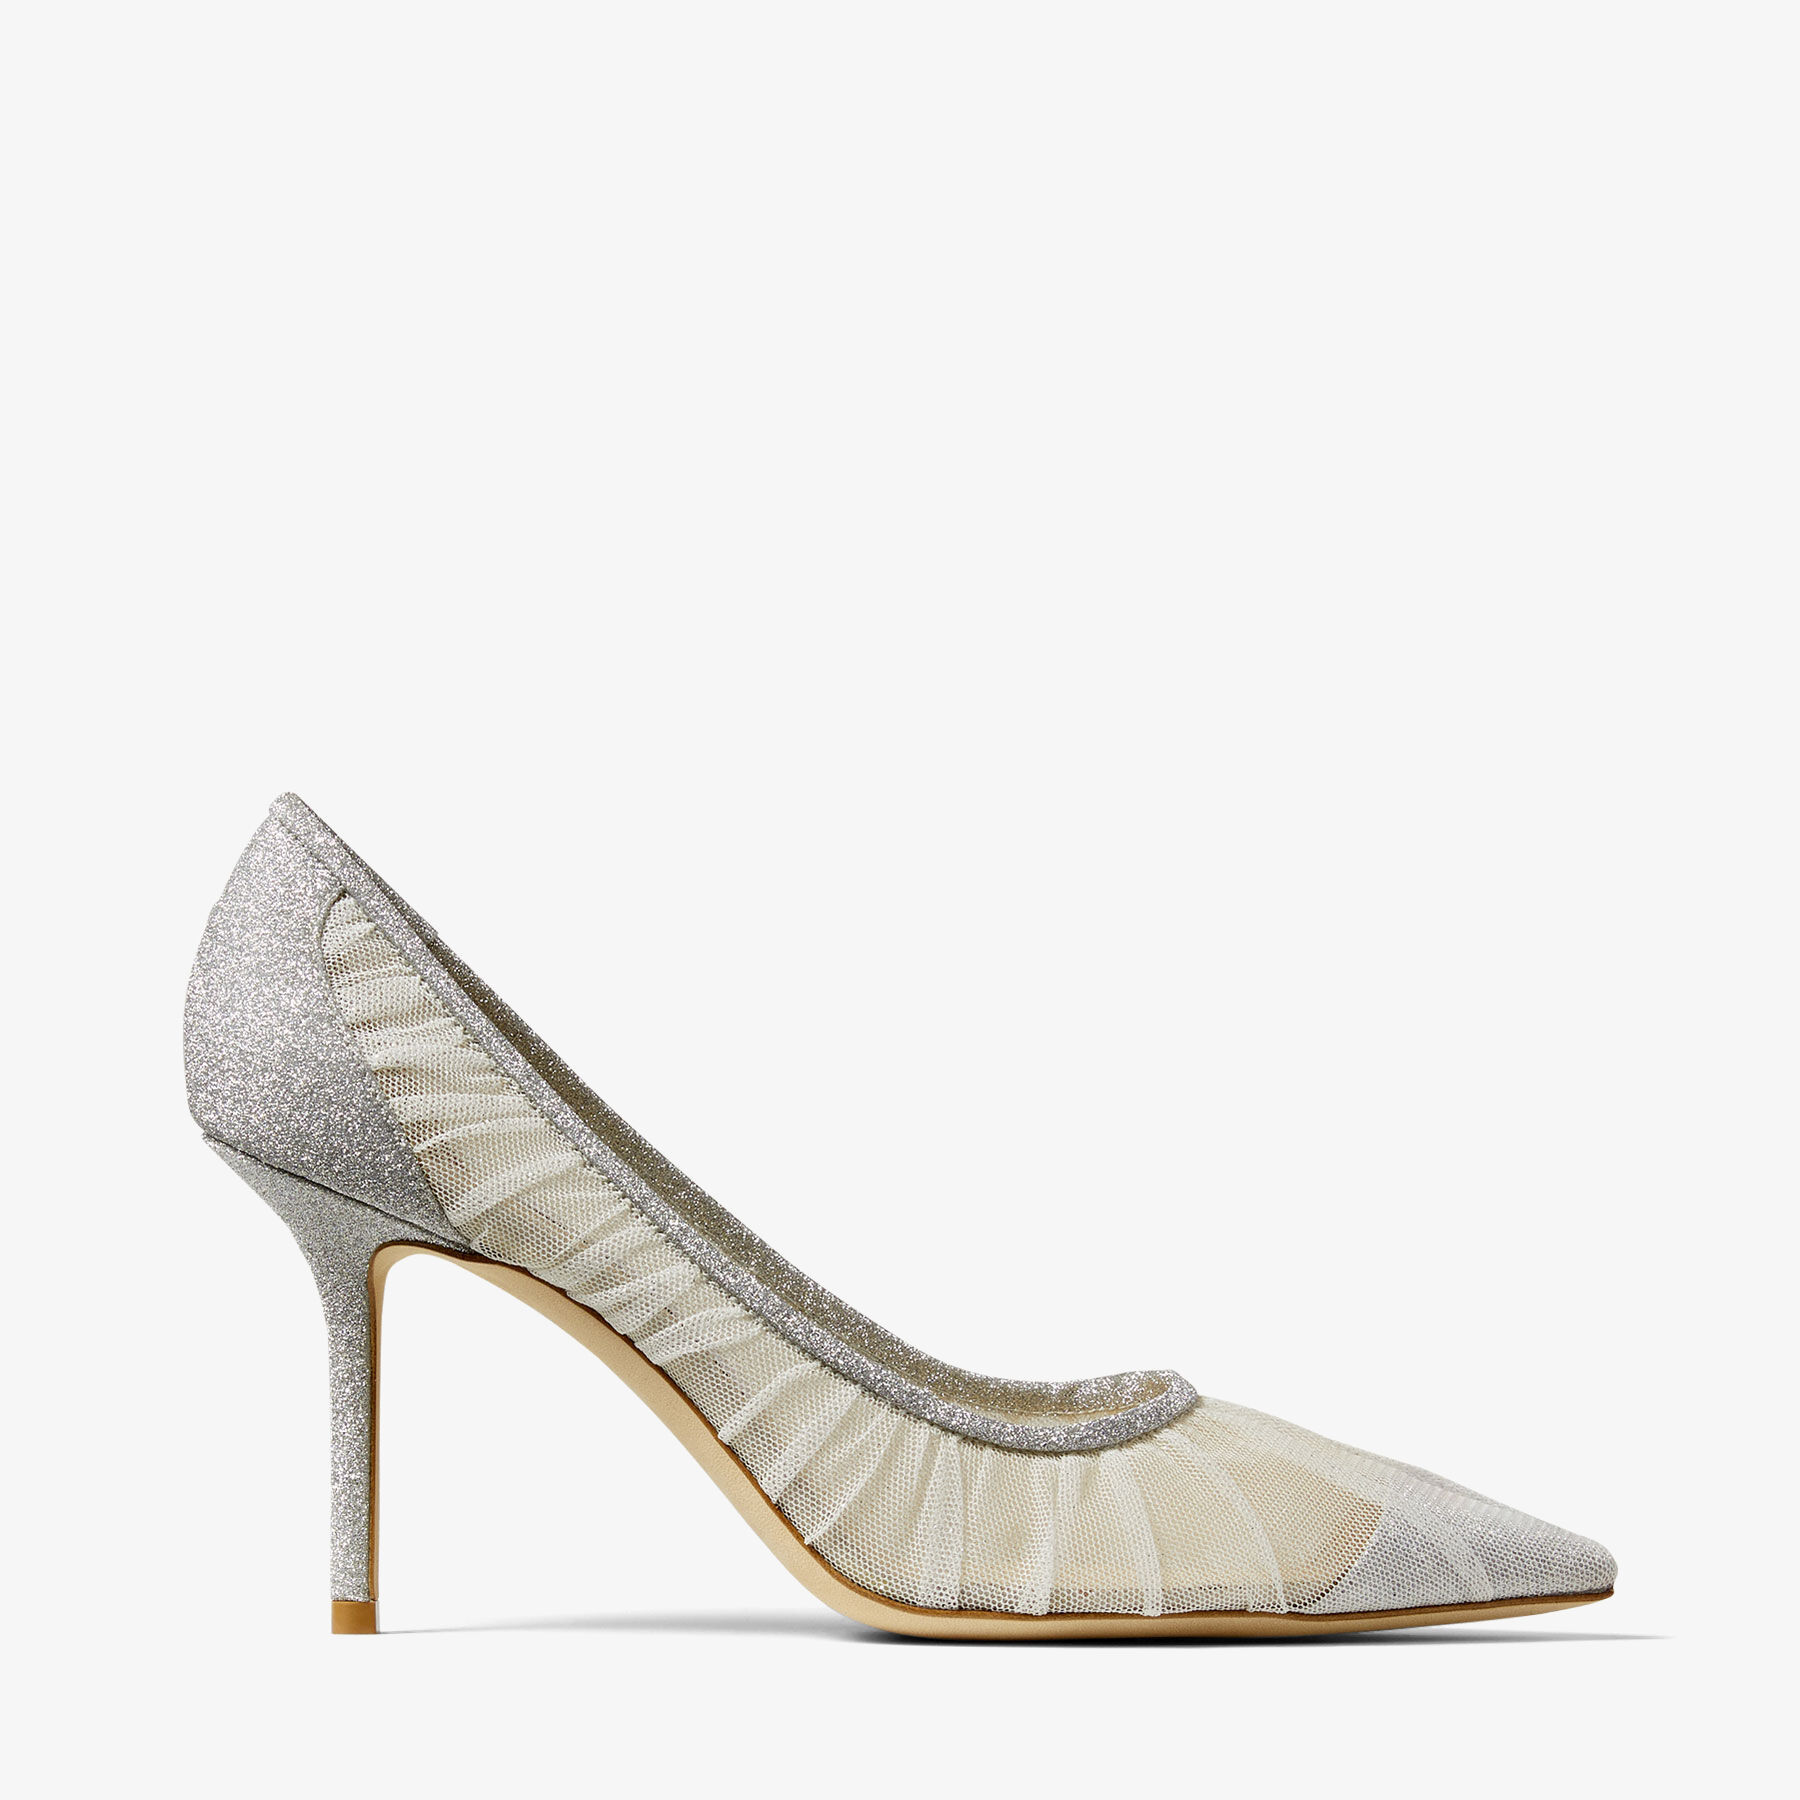 Buy Jimmy Choo Mimi silver heels new 39.5 at Ubuy India